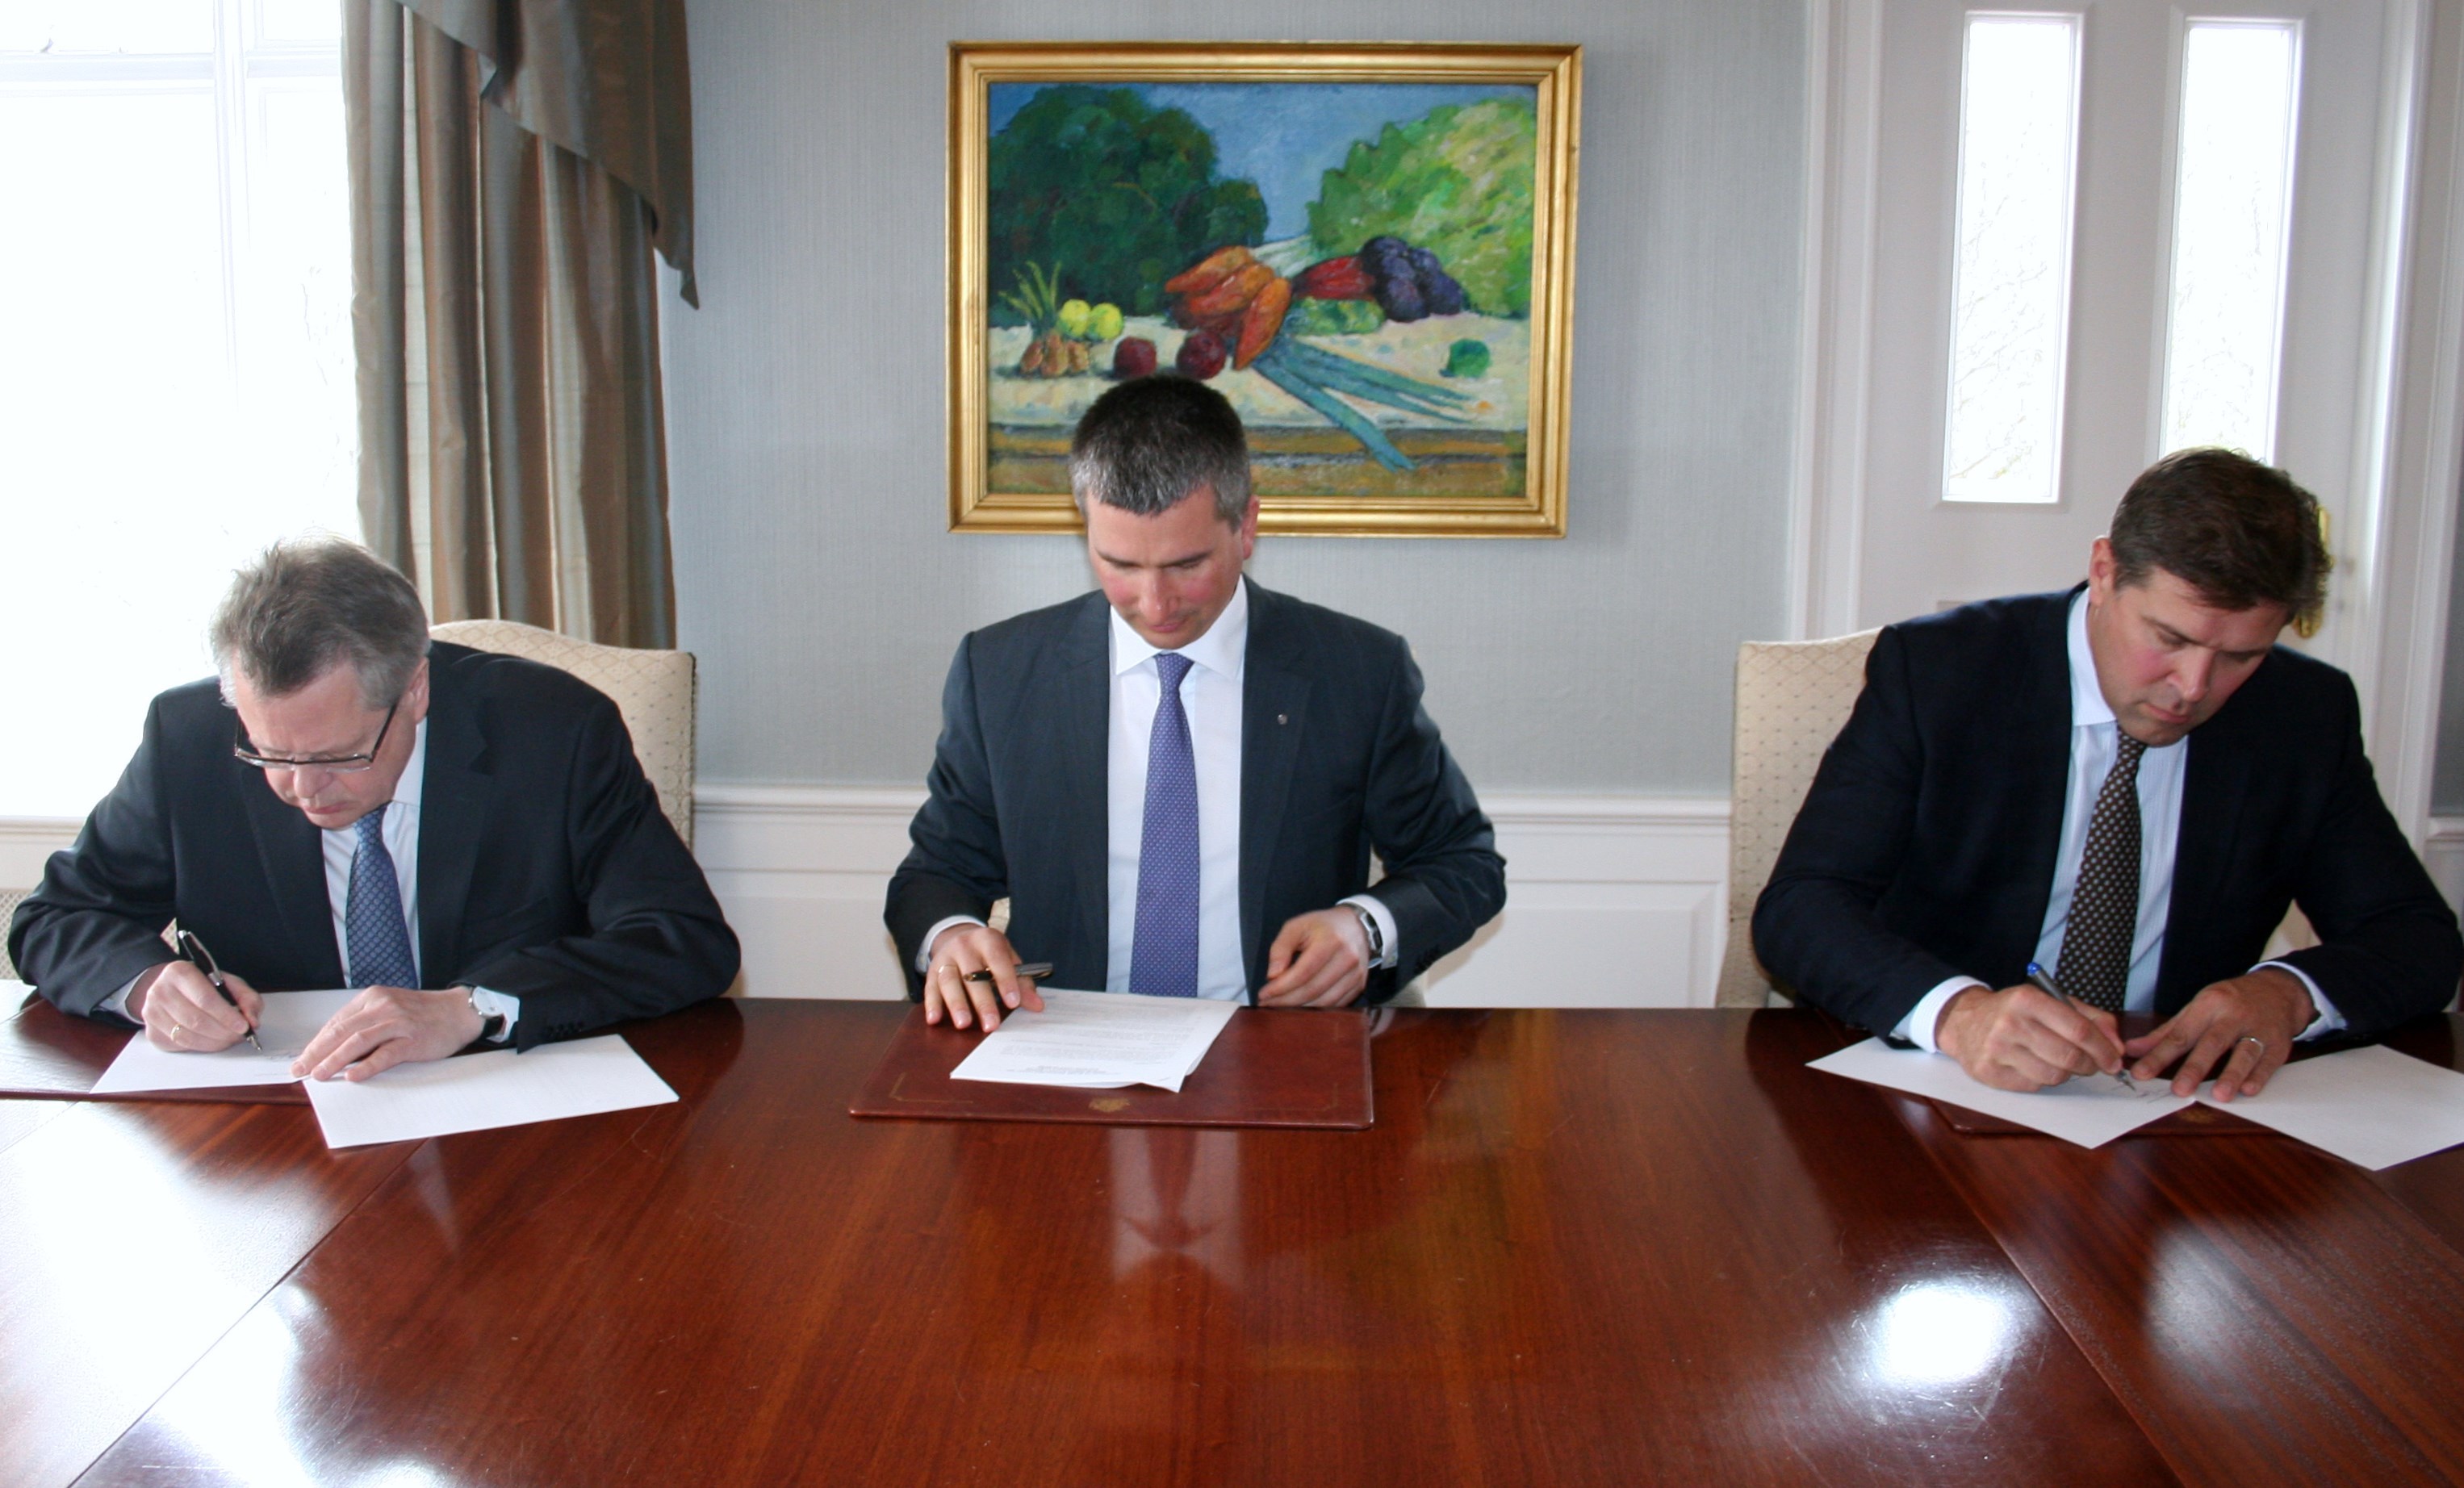 Icelandic Minister of Finance and Economic Affairs Bjarni Benediktsson, Central Bank of Iceland Governor Már Guðmundsson, and Polish Minister of Finance Mateusz Szczurek sign an amendment to the loan